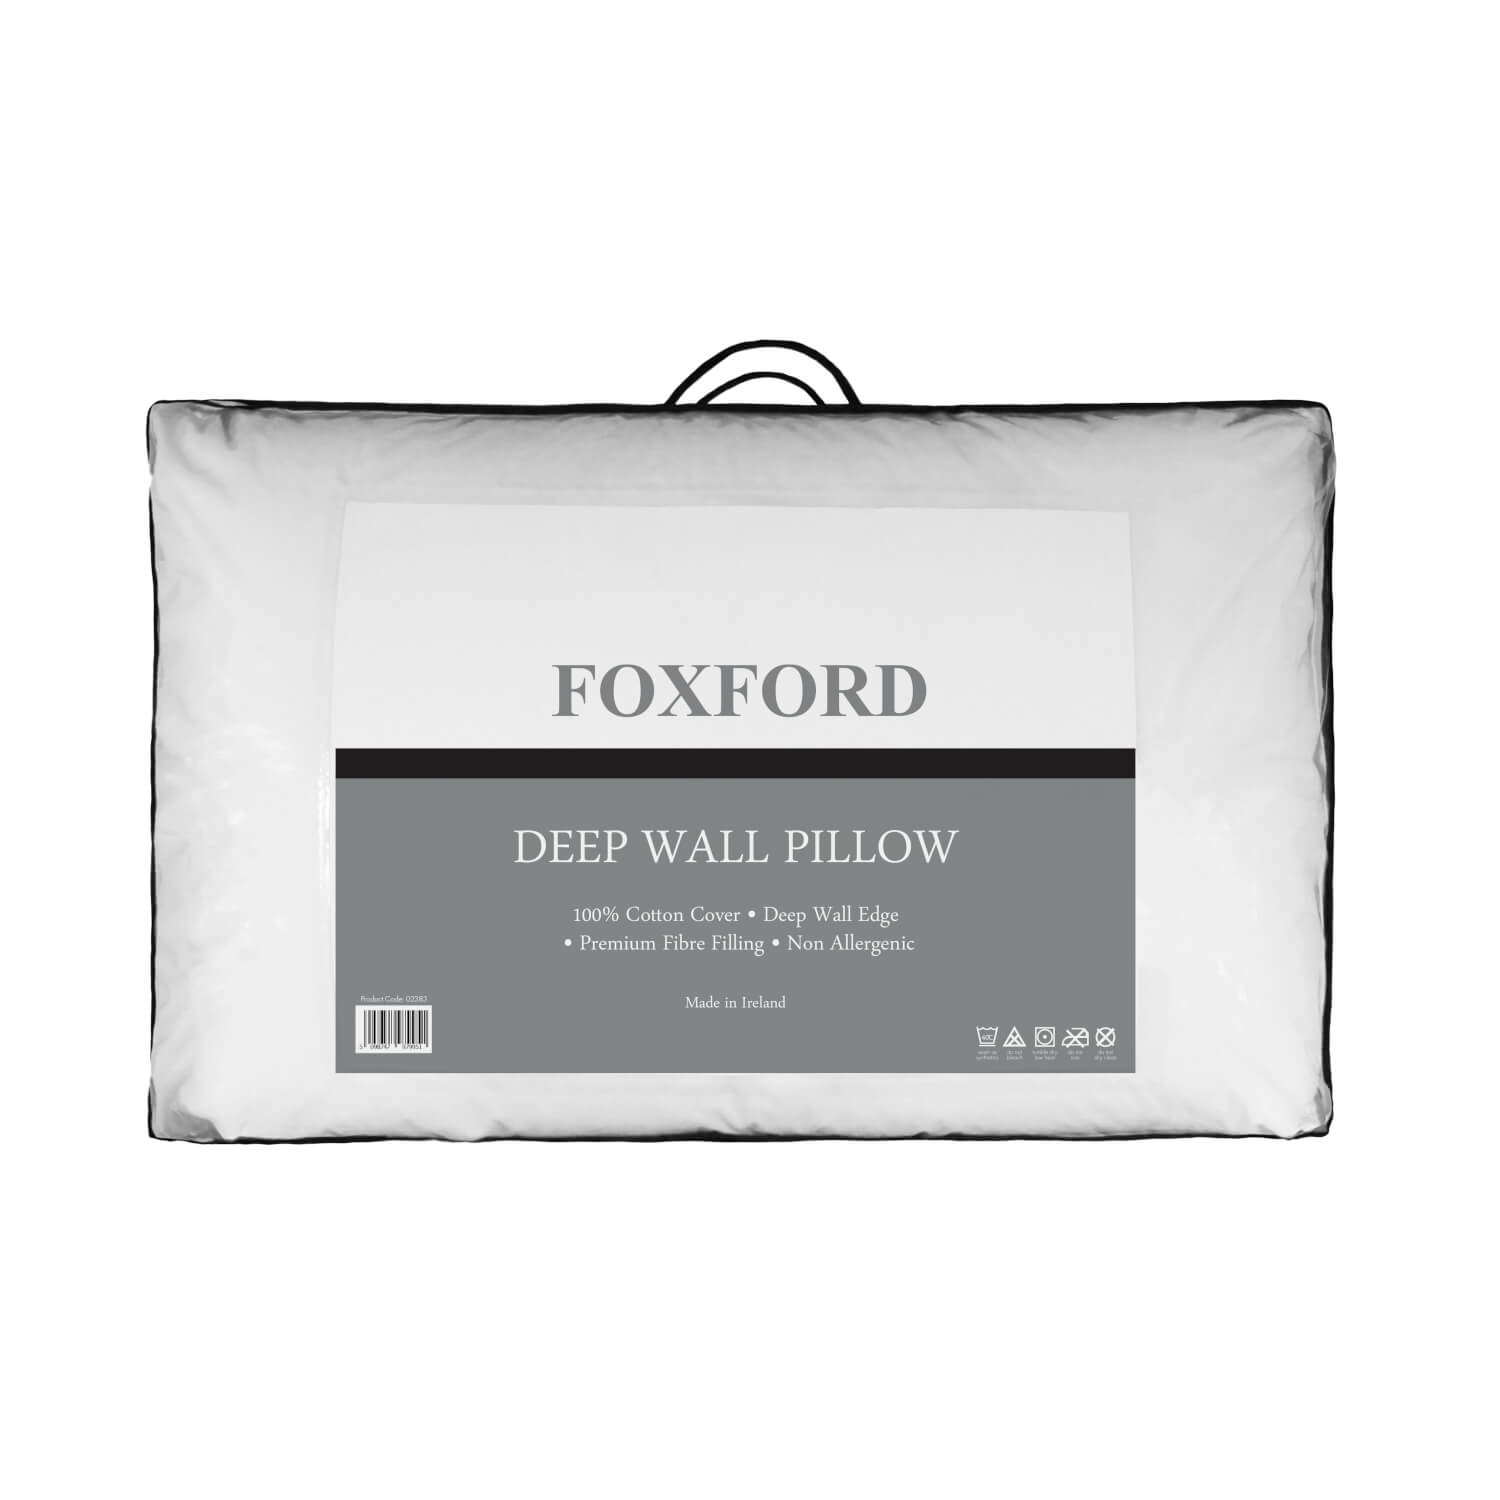 Foxford Deep Wall Pillow 1 Shaws Department Stores